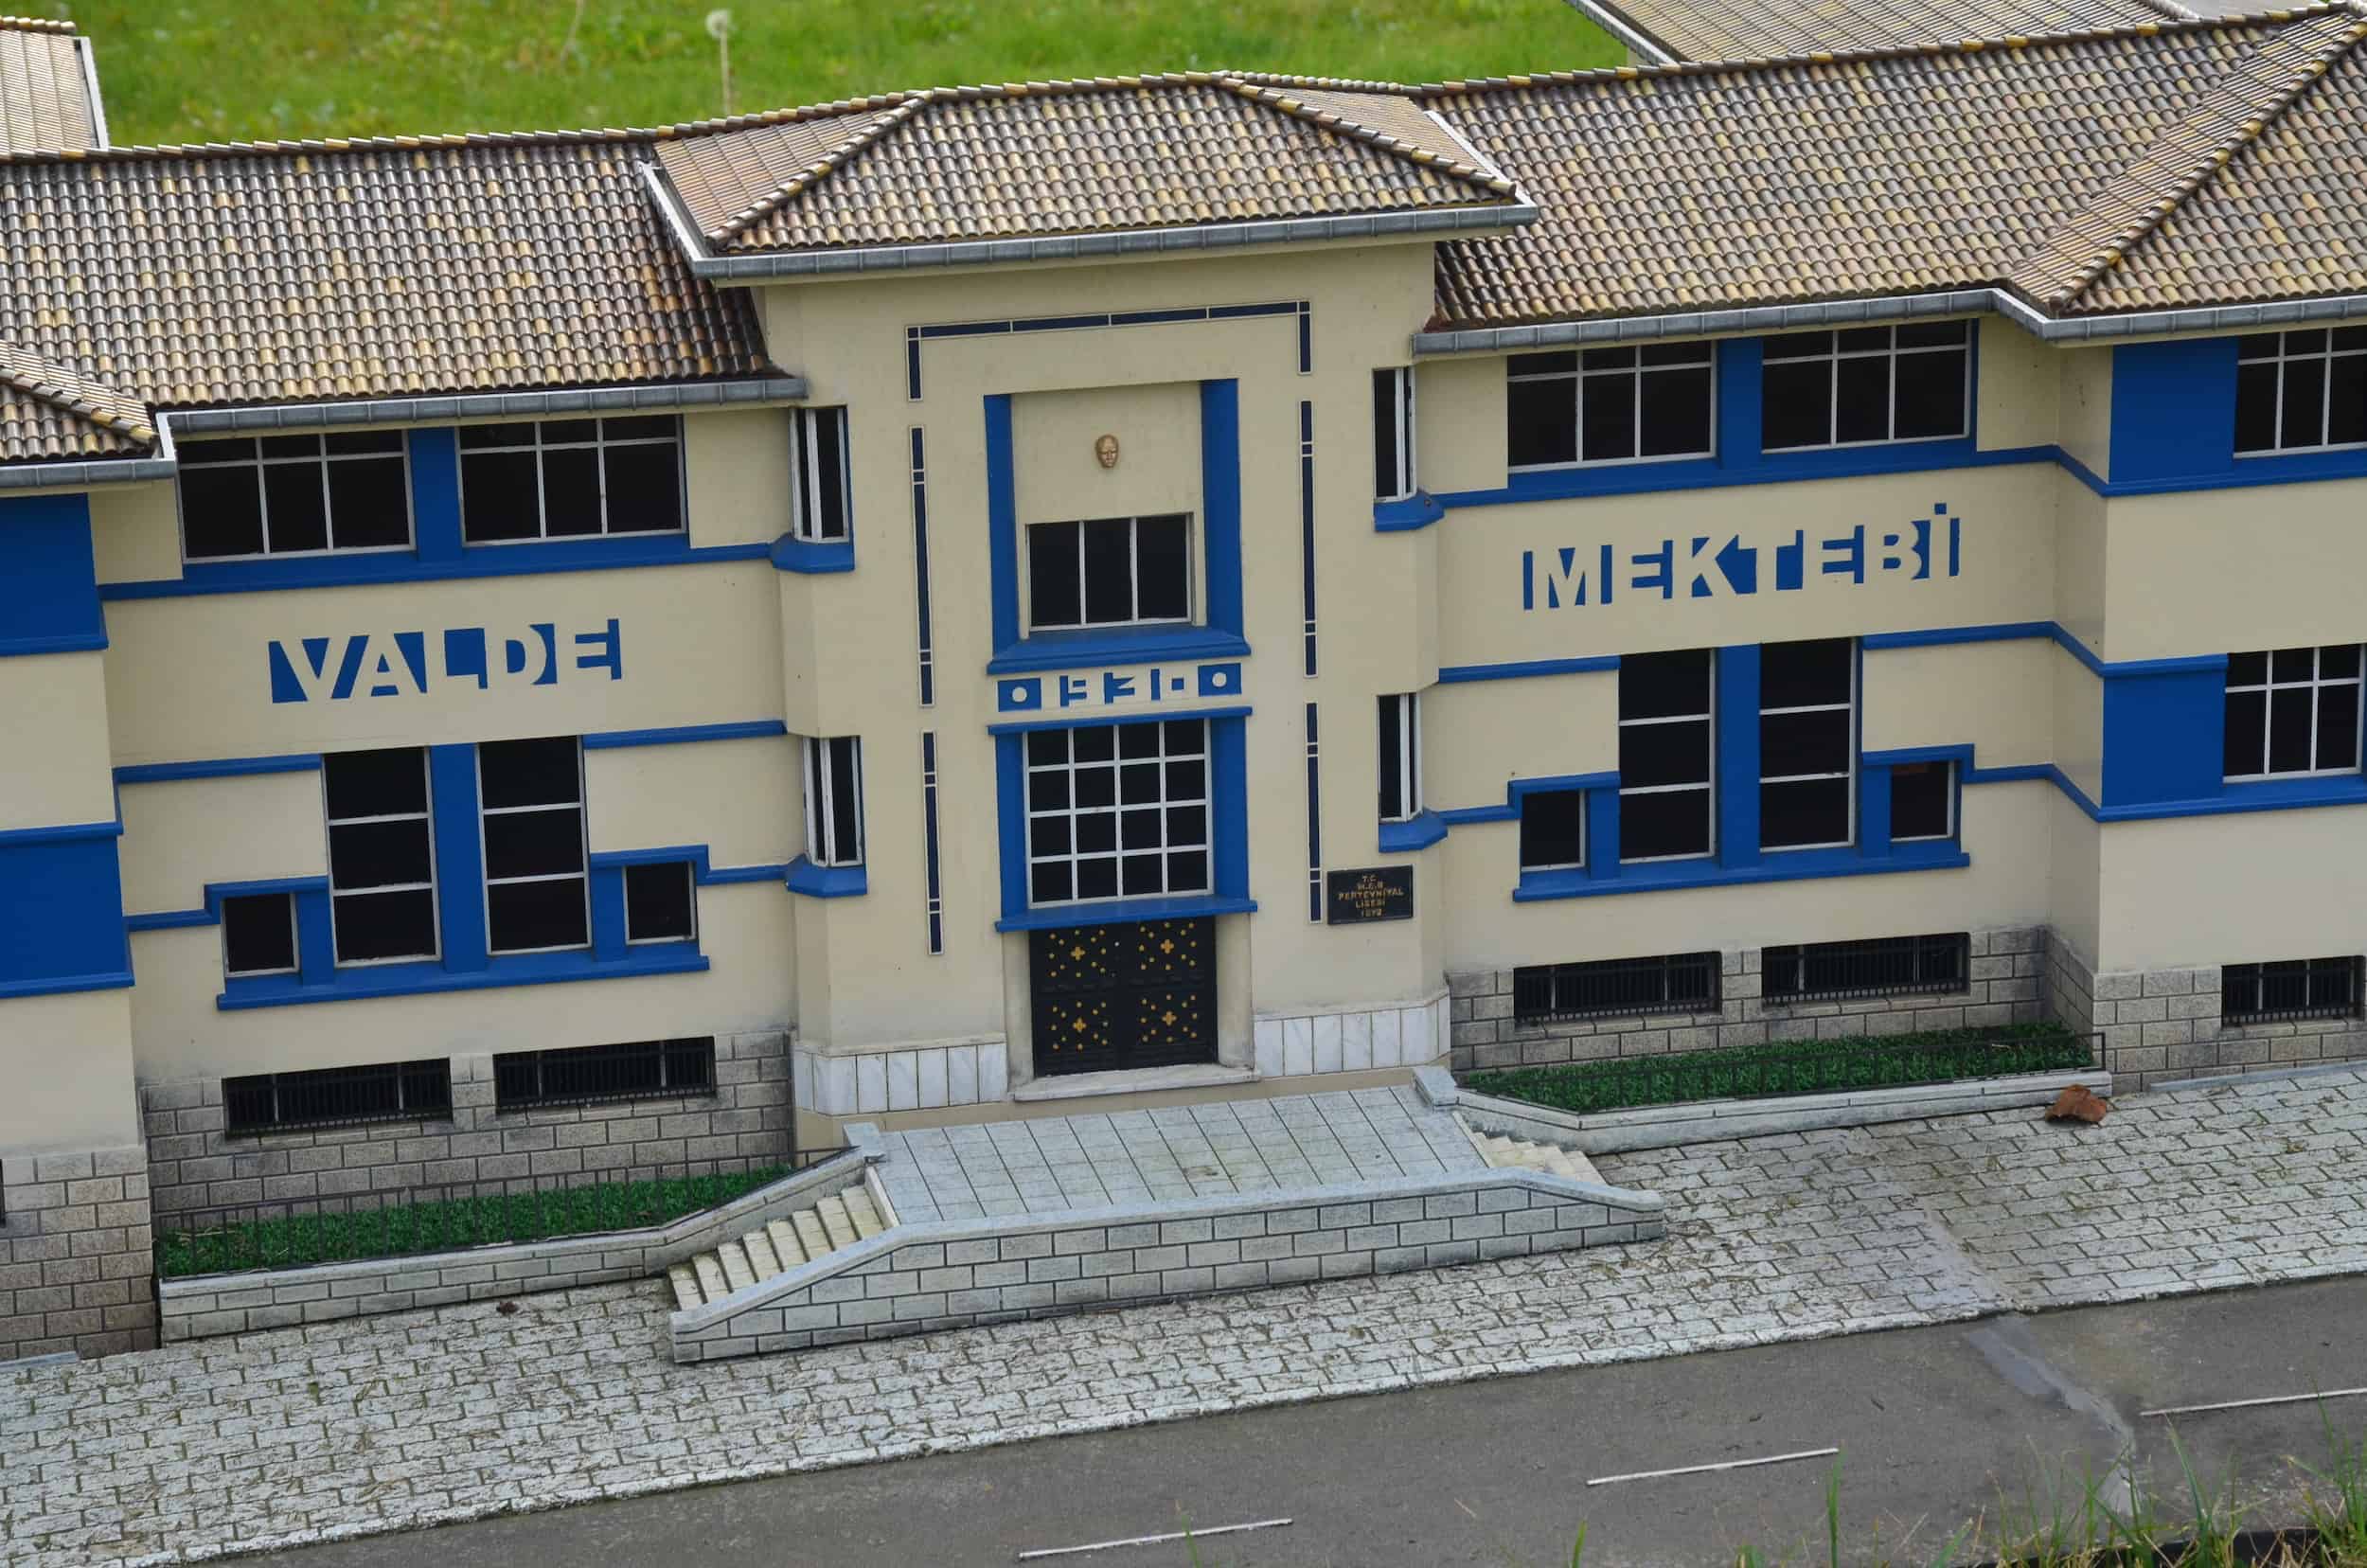 Model of the Pertevniyal High School, Aksaray, 19th century at Miniatürk in Istanbul, Turkey